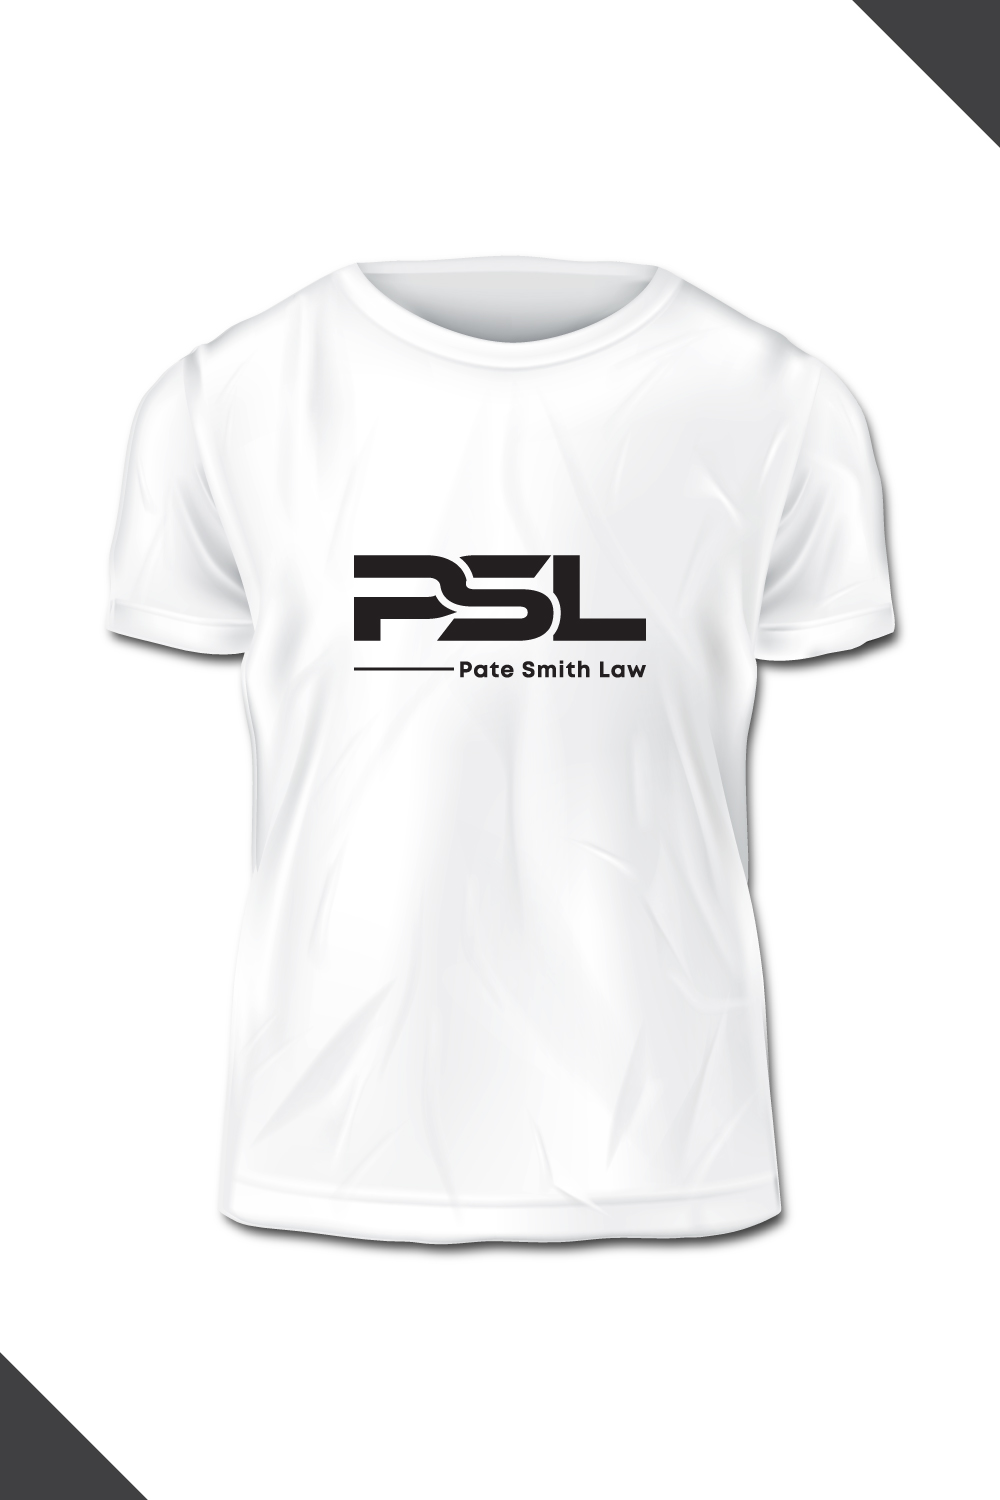 PSL logo pinterest preview image.